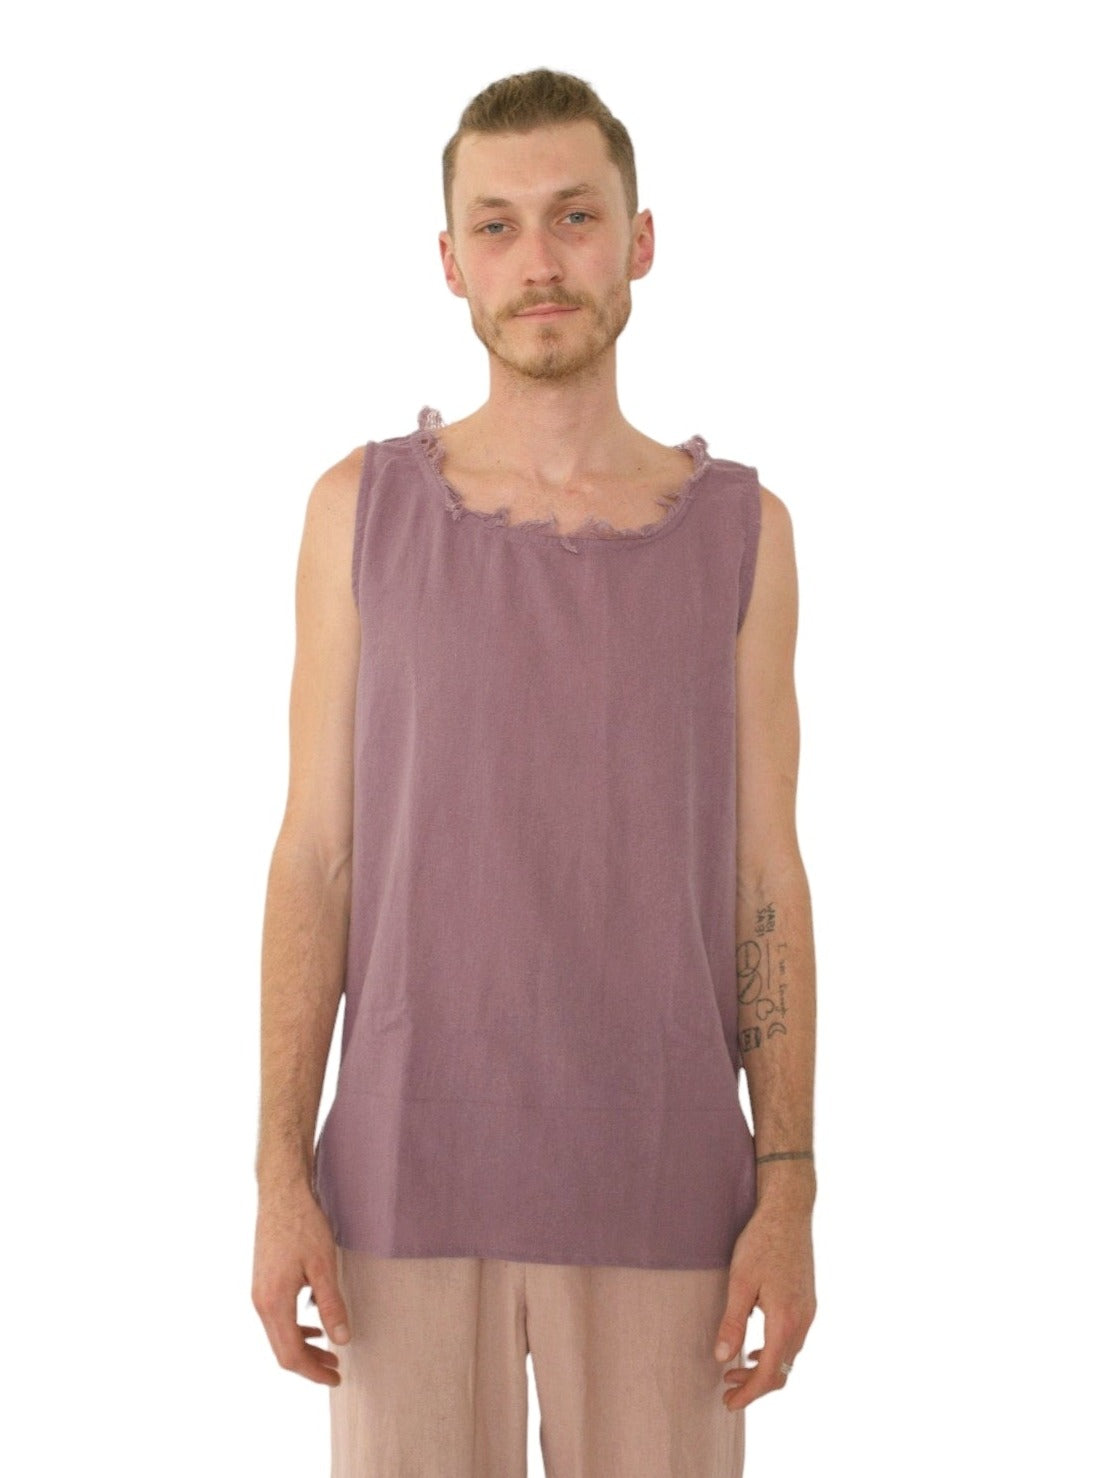 Men's Organic Cotton Sleeveless Shirt in Lavender